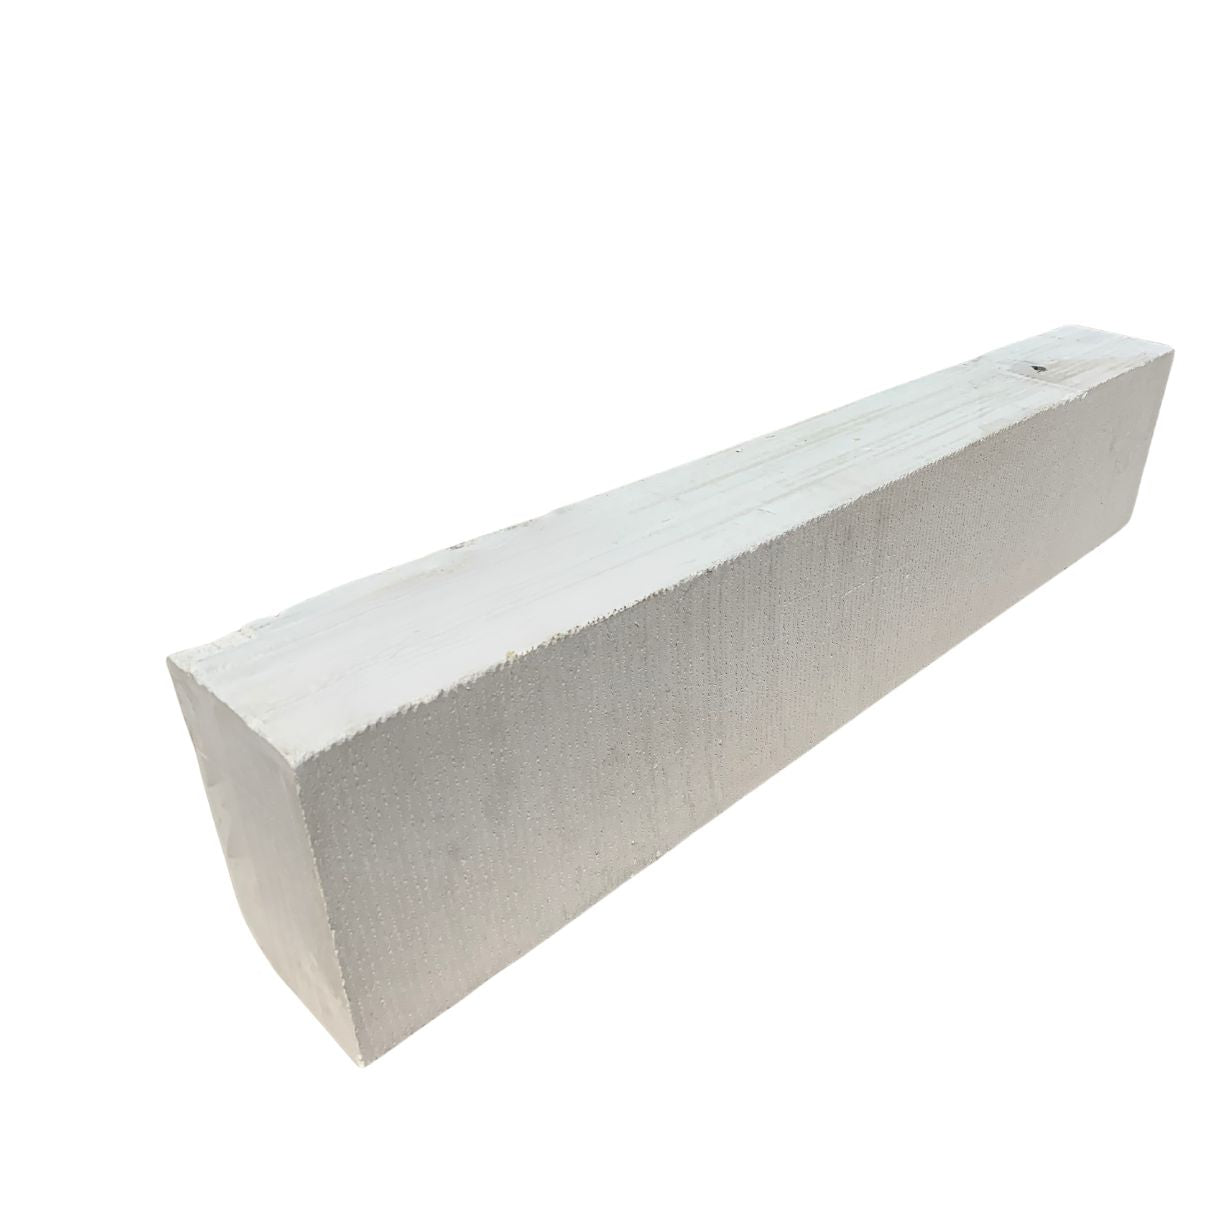 Aerated concrete Lintel 2500x250x200mm